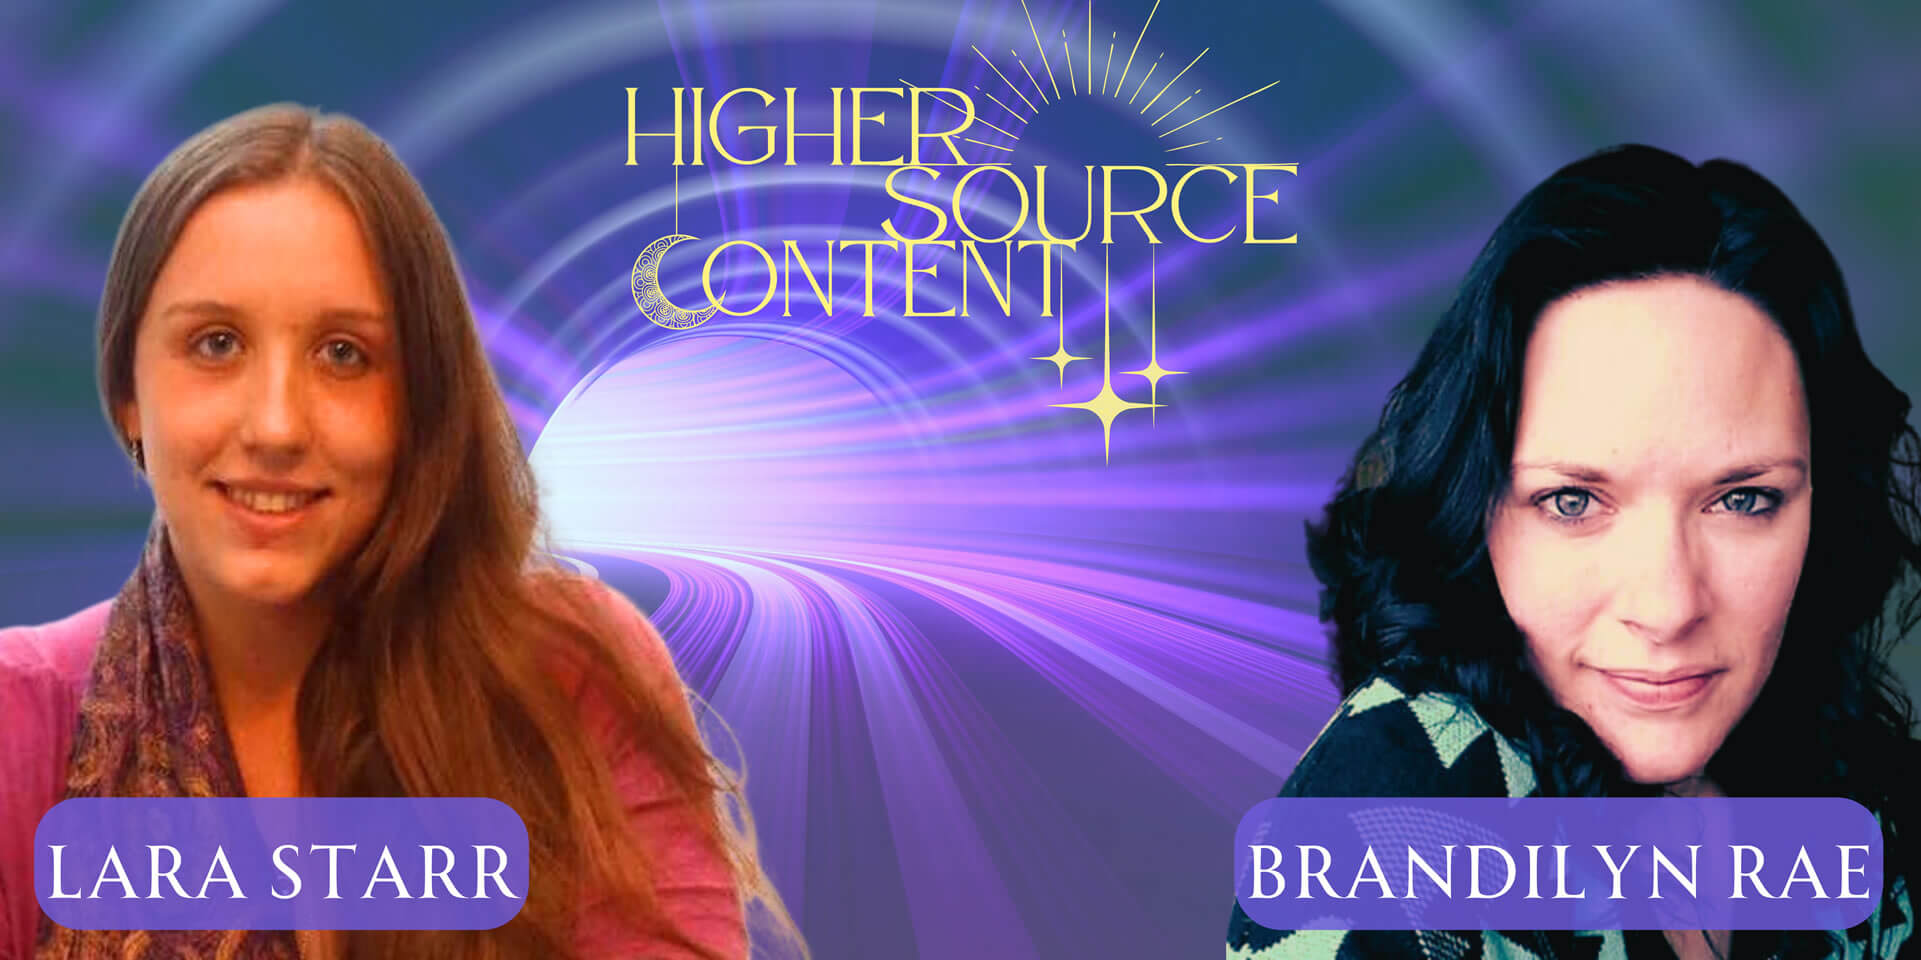 Higher Source Content bio